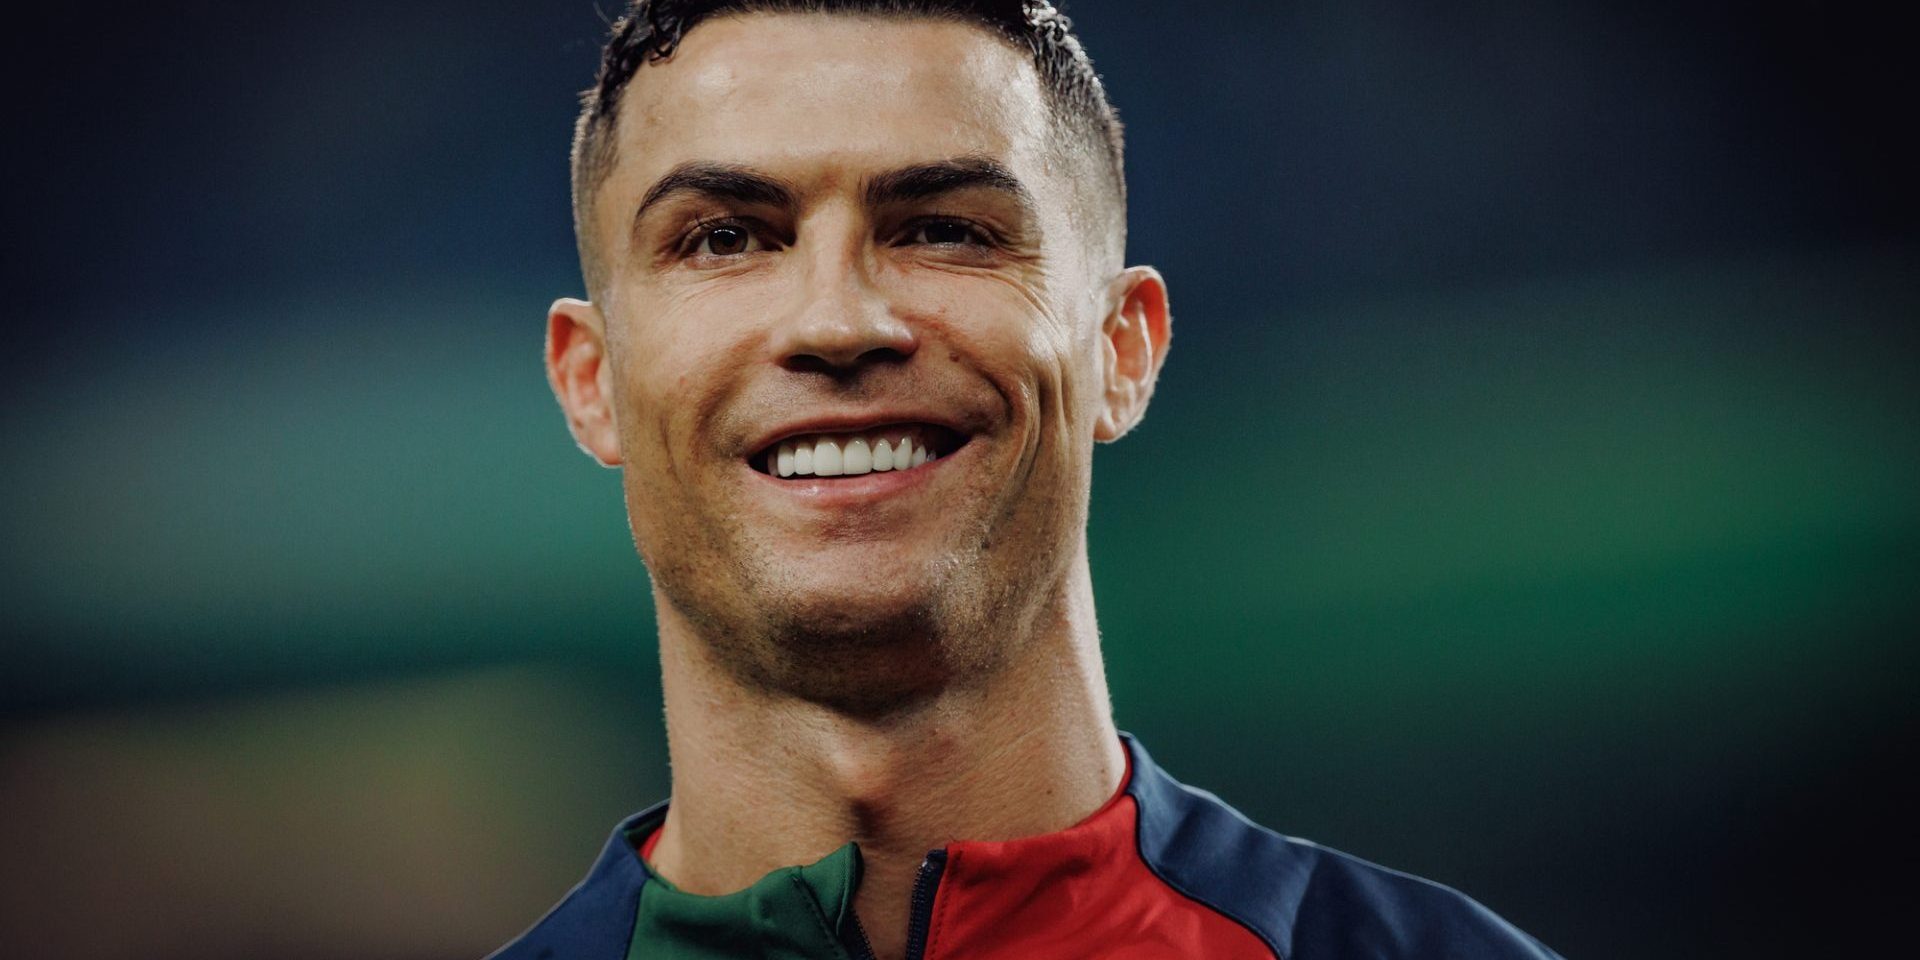 Ronaldo Set To Make History With Record Sixth Euros Appearance